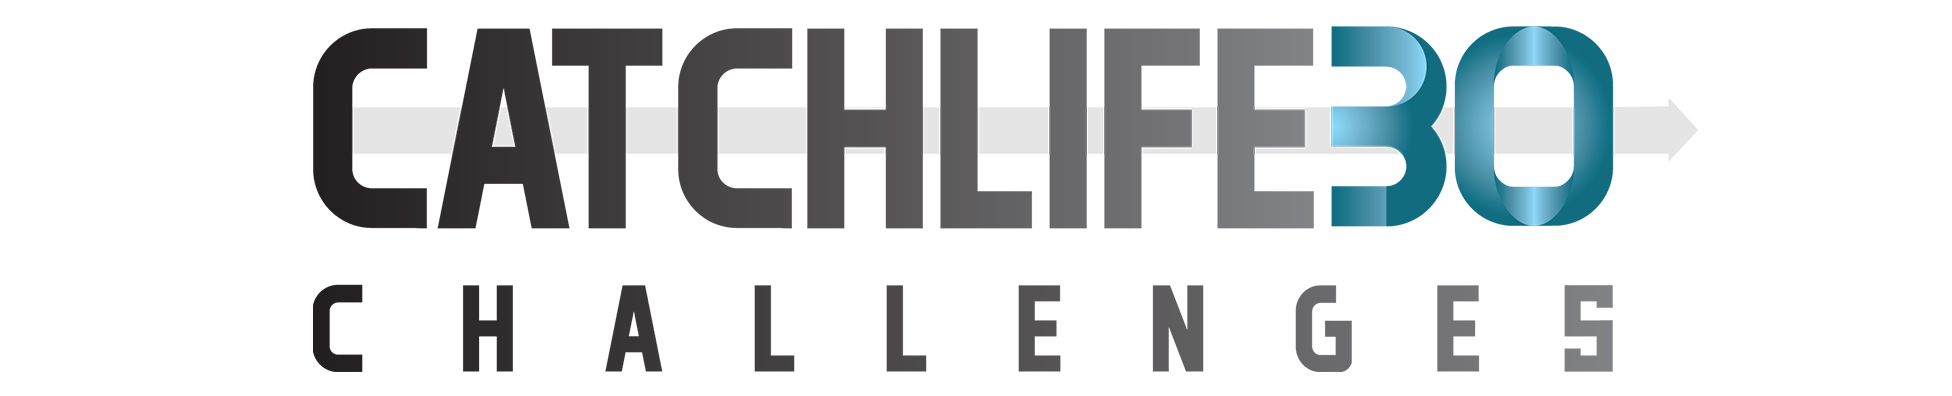 Catchlife30 Challenges logo